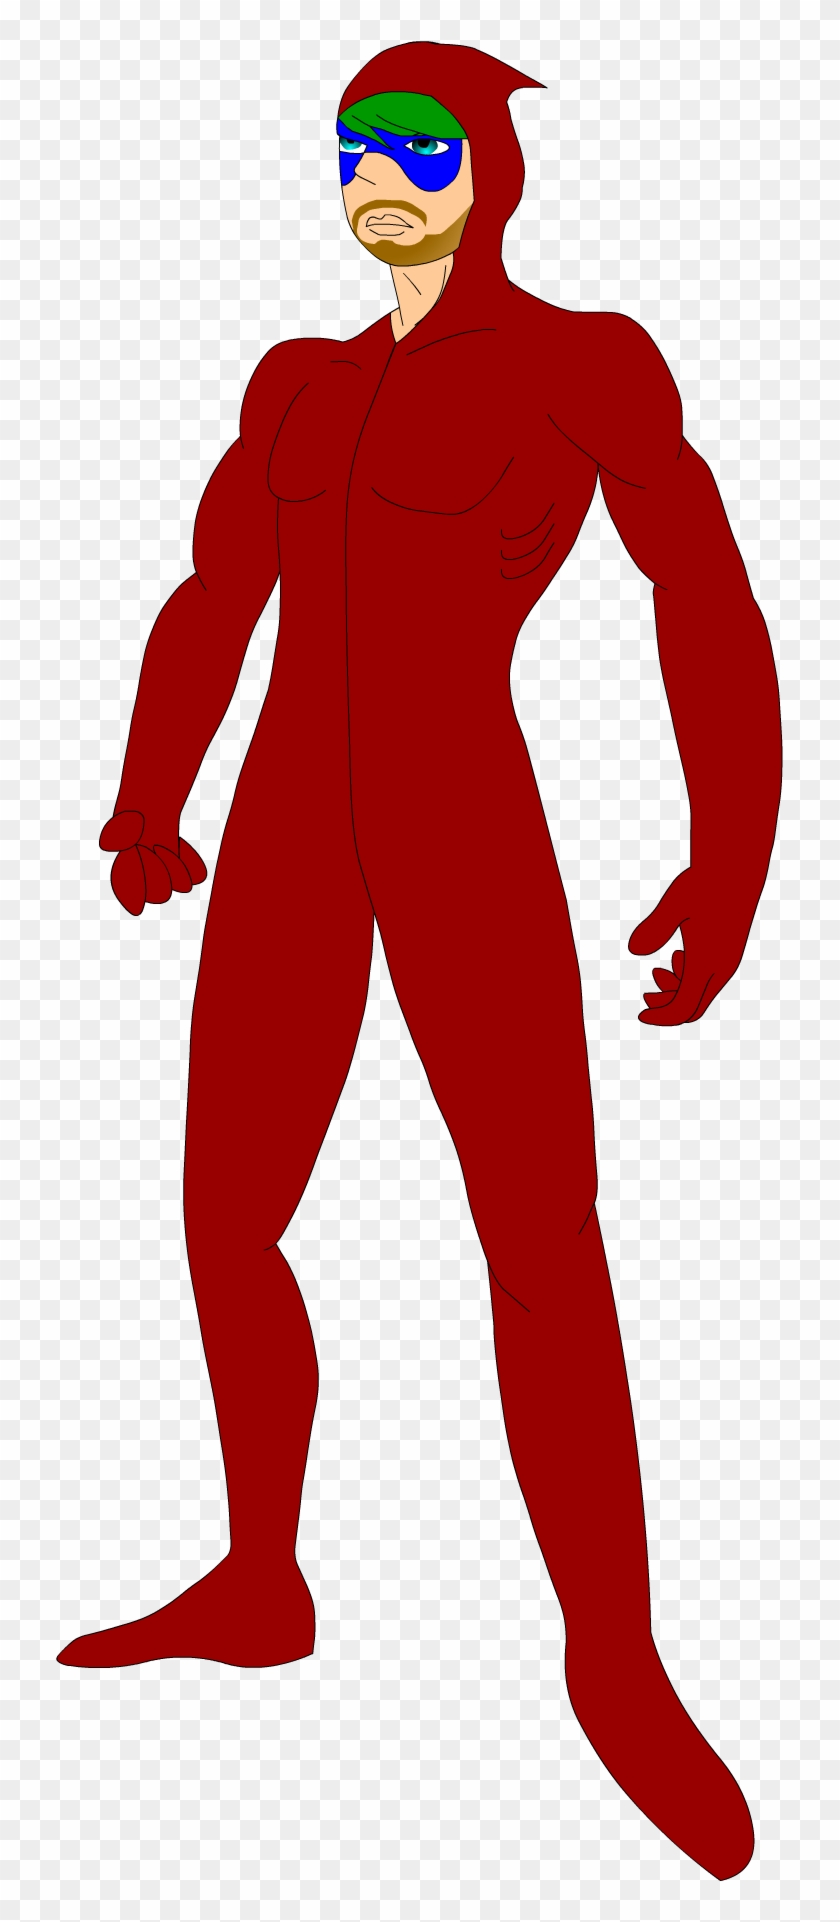 Jackaboy Man Costume By Mecha-mike - Illustration #916775